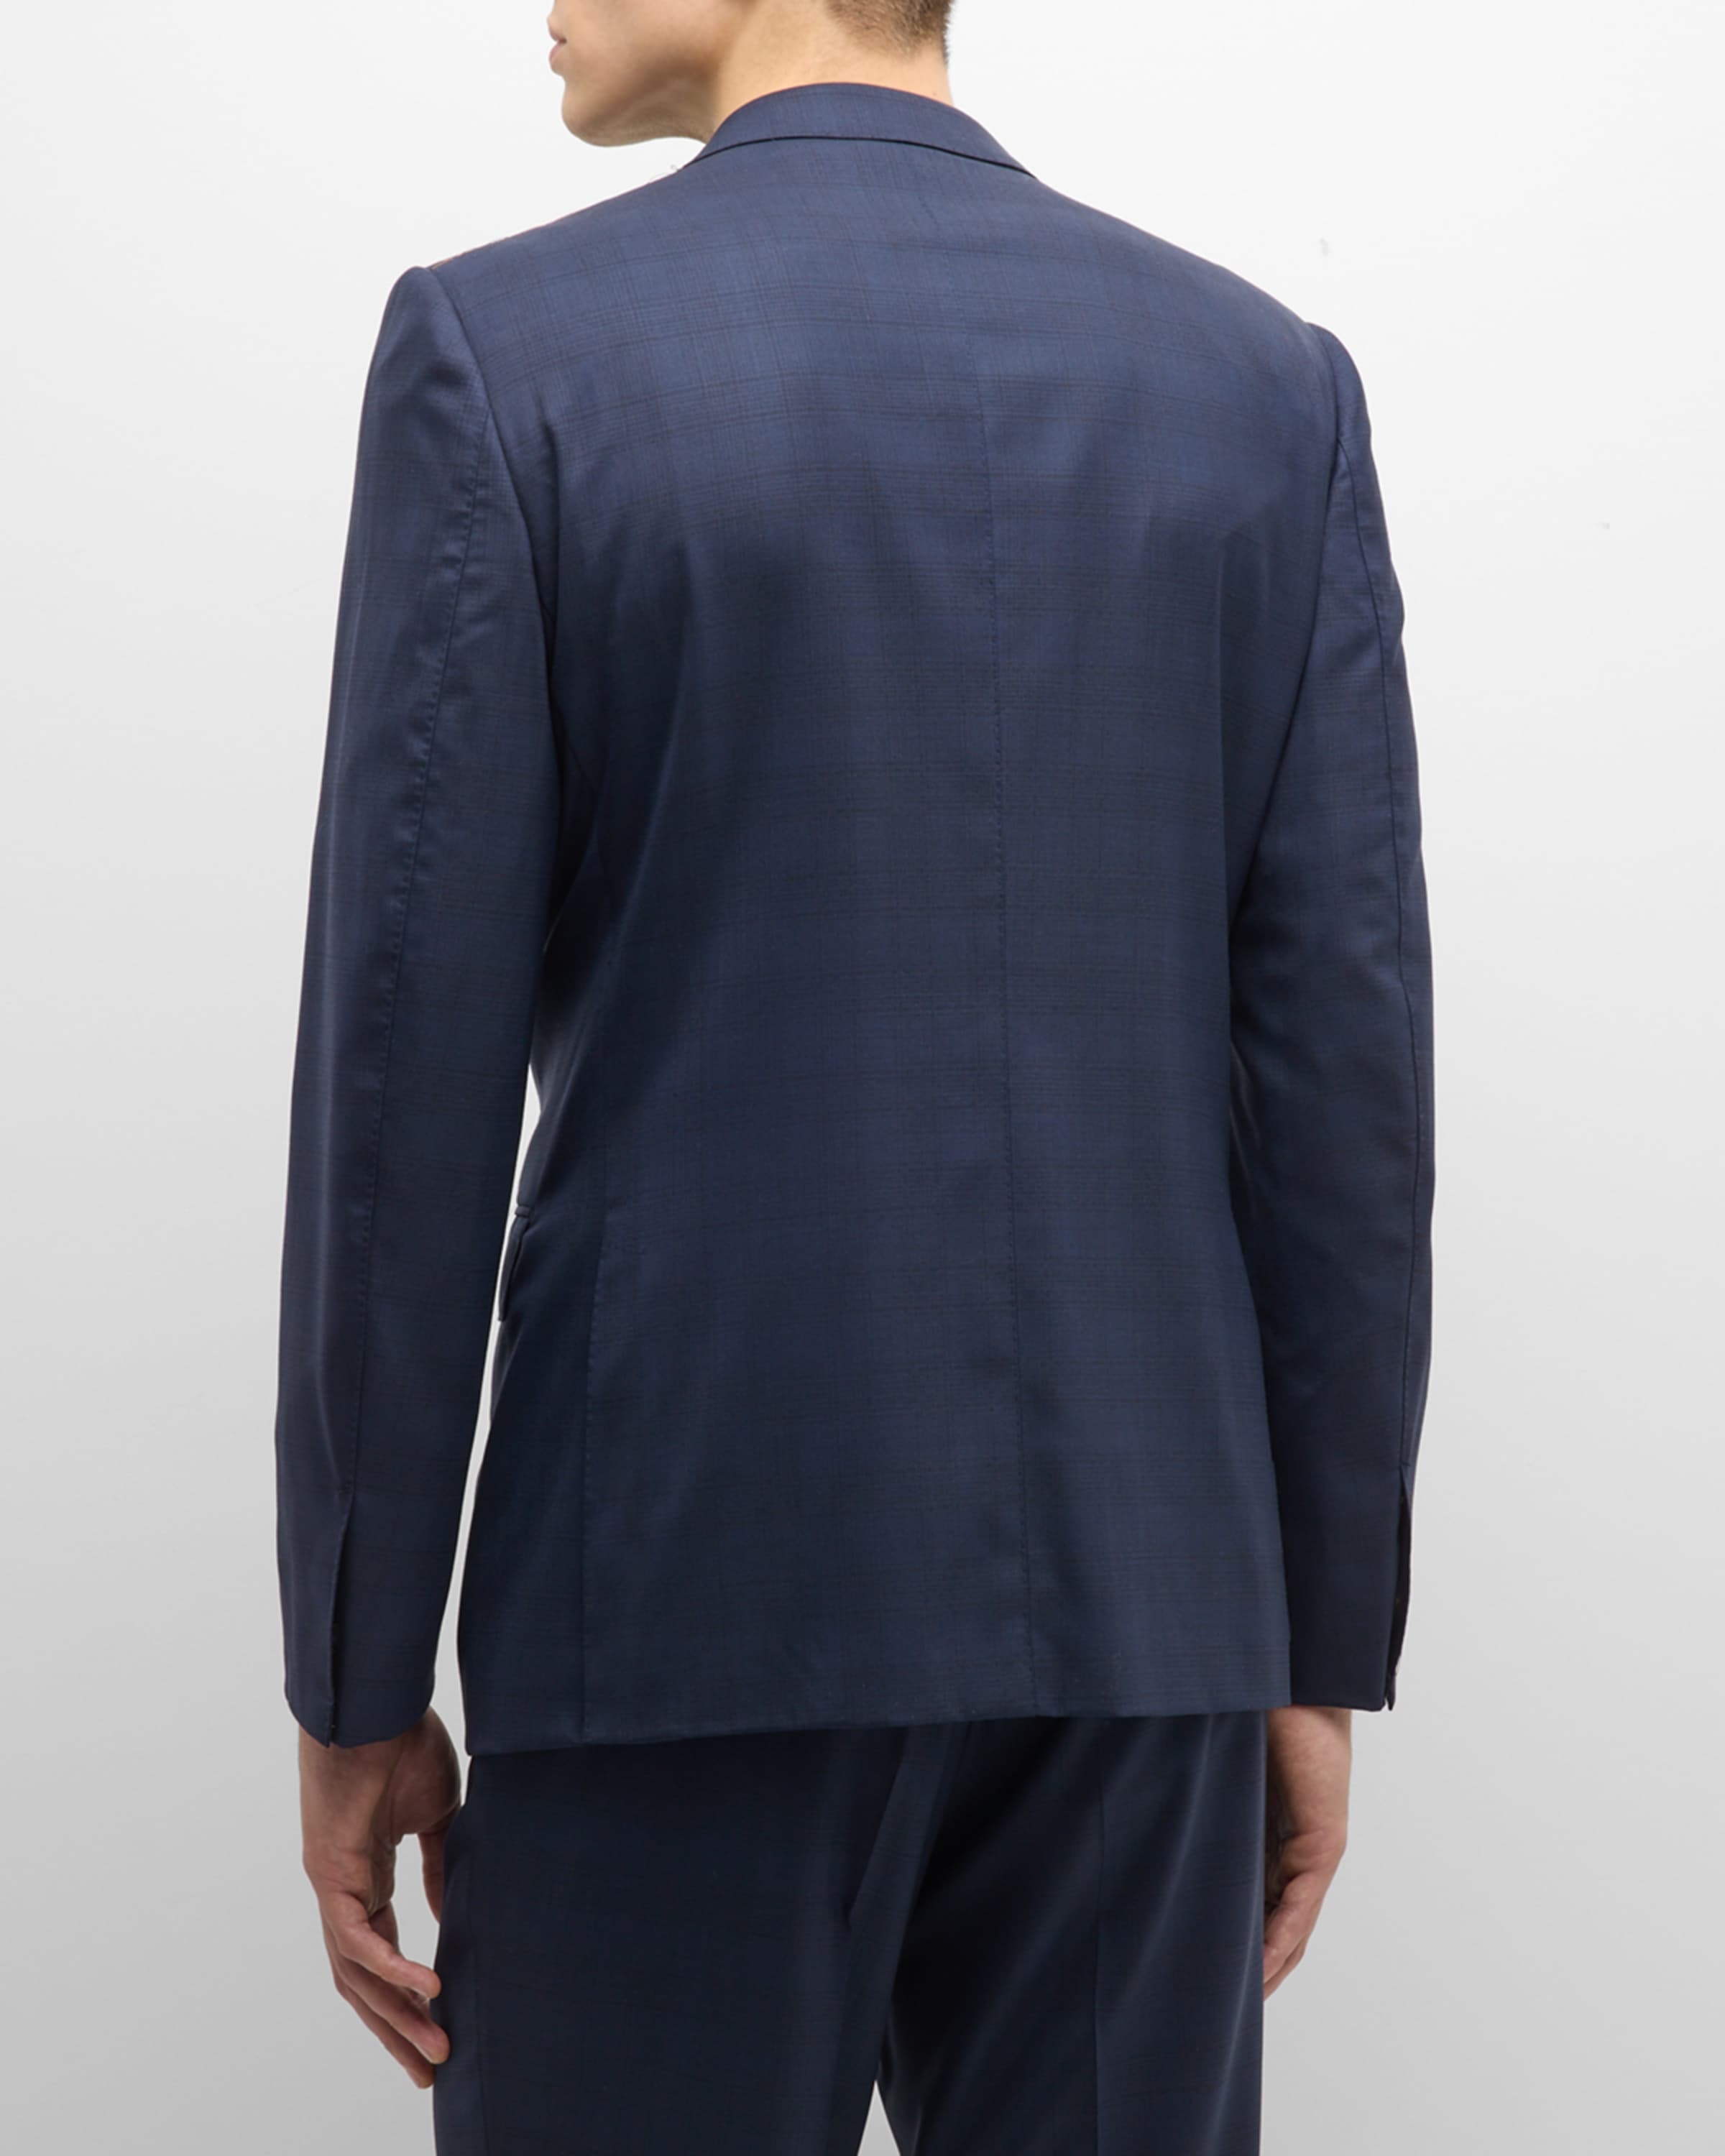 Men's Centoventimila Tonal Plaid Wool Suit - 6